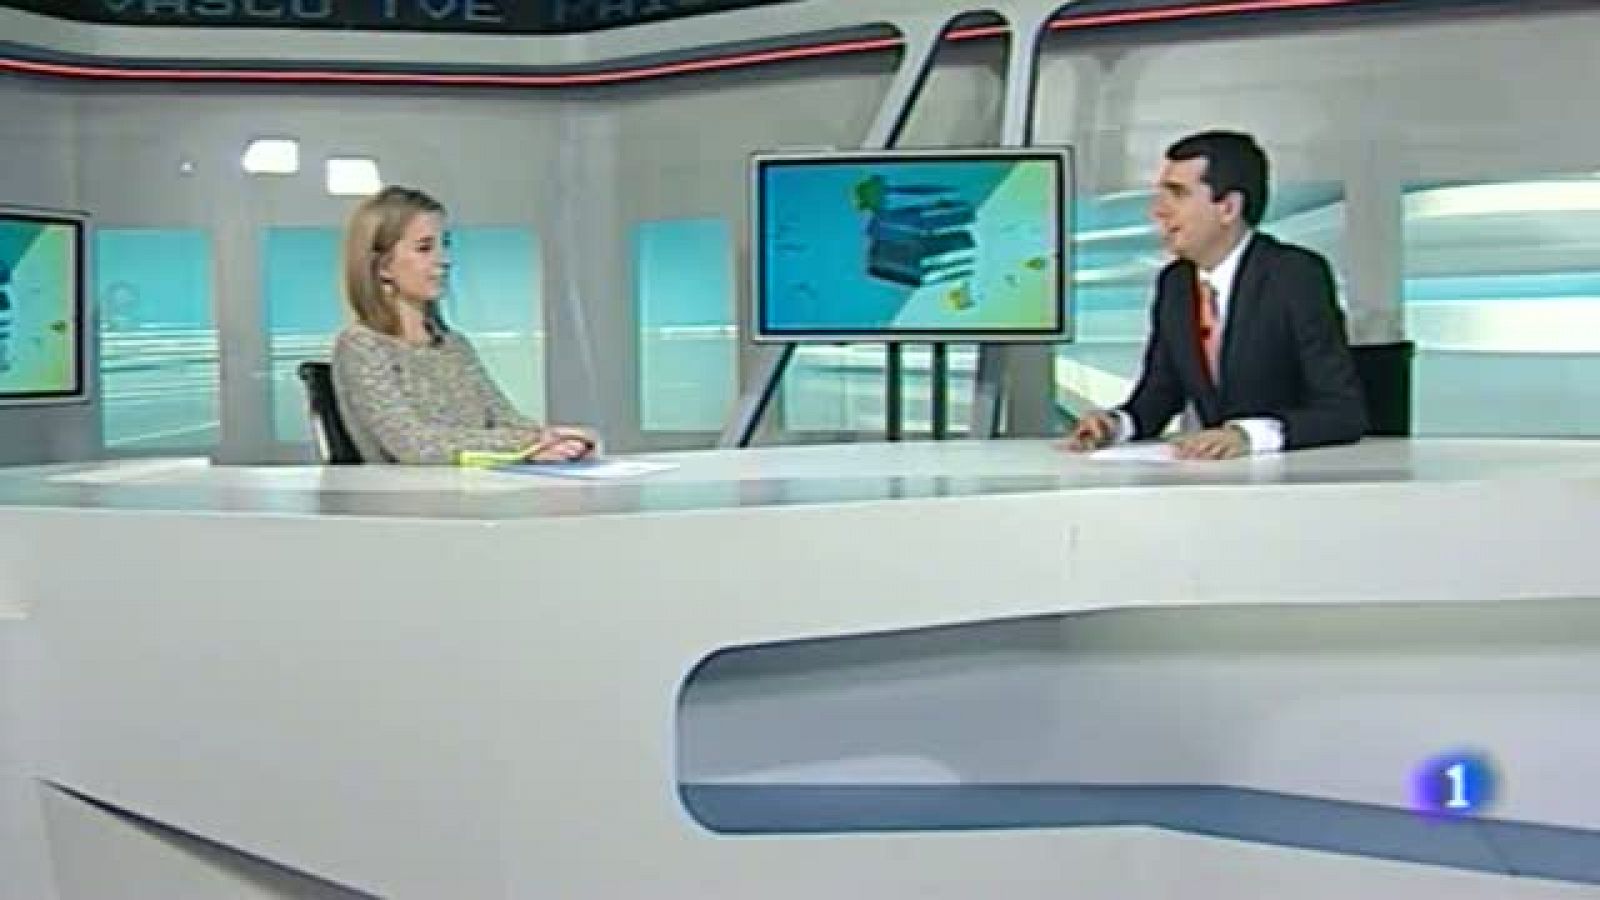 Telenorte - País Vasco: Entrevista electoral a Aitziber Ibaibarriaga, candidata de EH Bildu a la alcaldía de Bilbao, y a Eneko Goia, candidato del PNV a la alcaldía de San Sebastián. | RTVE Play